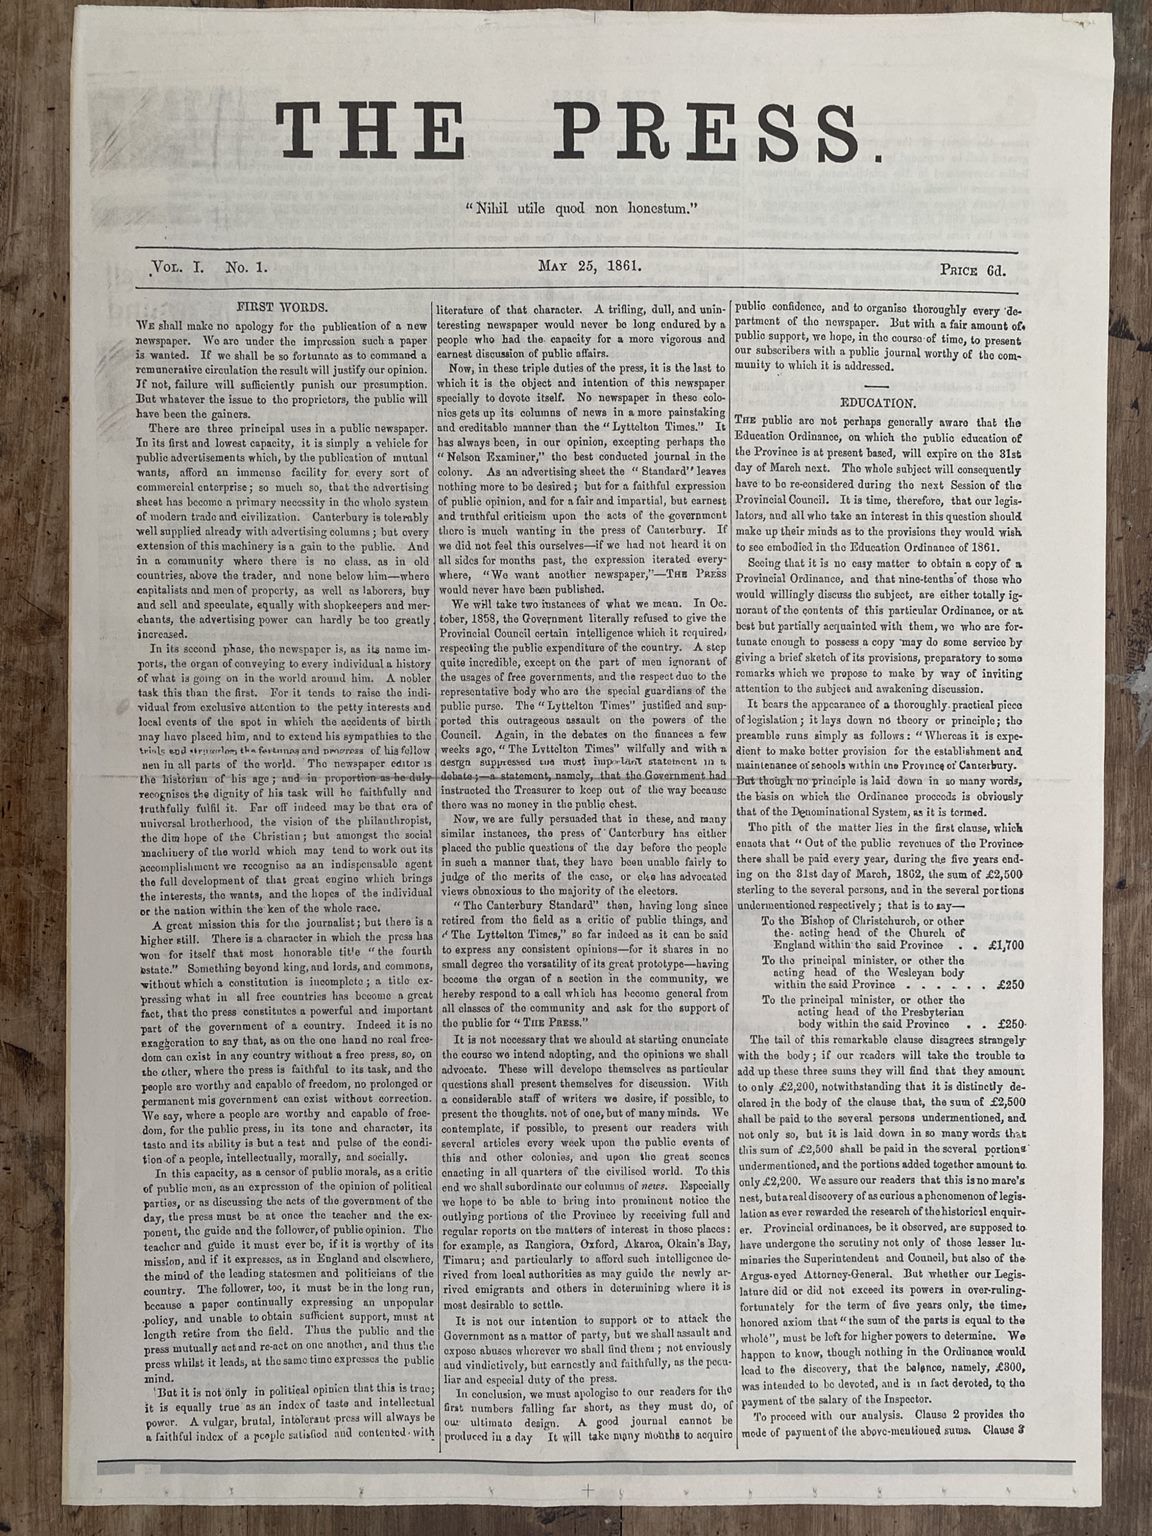 OLD NEWSPAPER: Christchurch Press, Vol 1-Vol 1, 25 May 1861